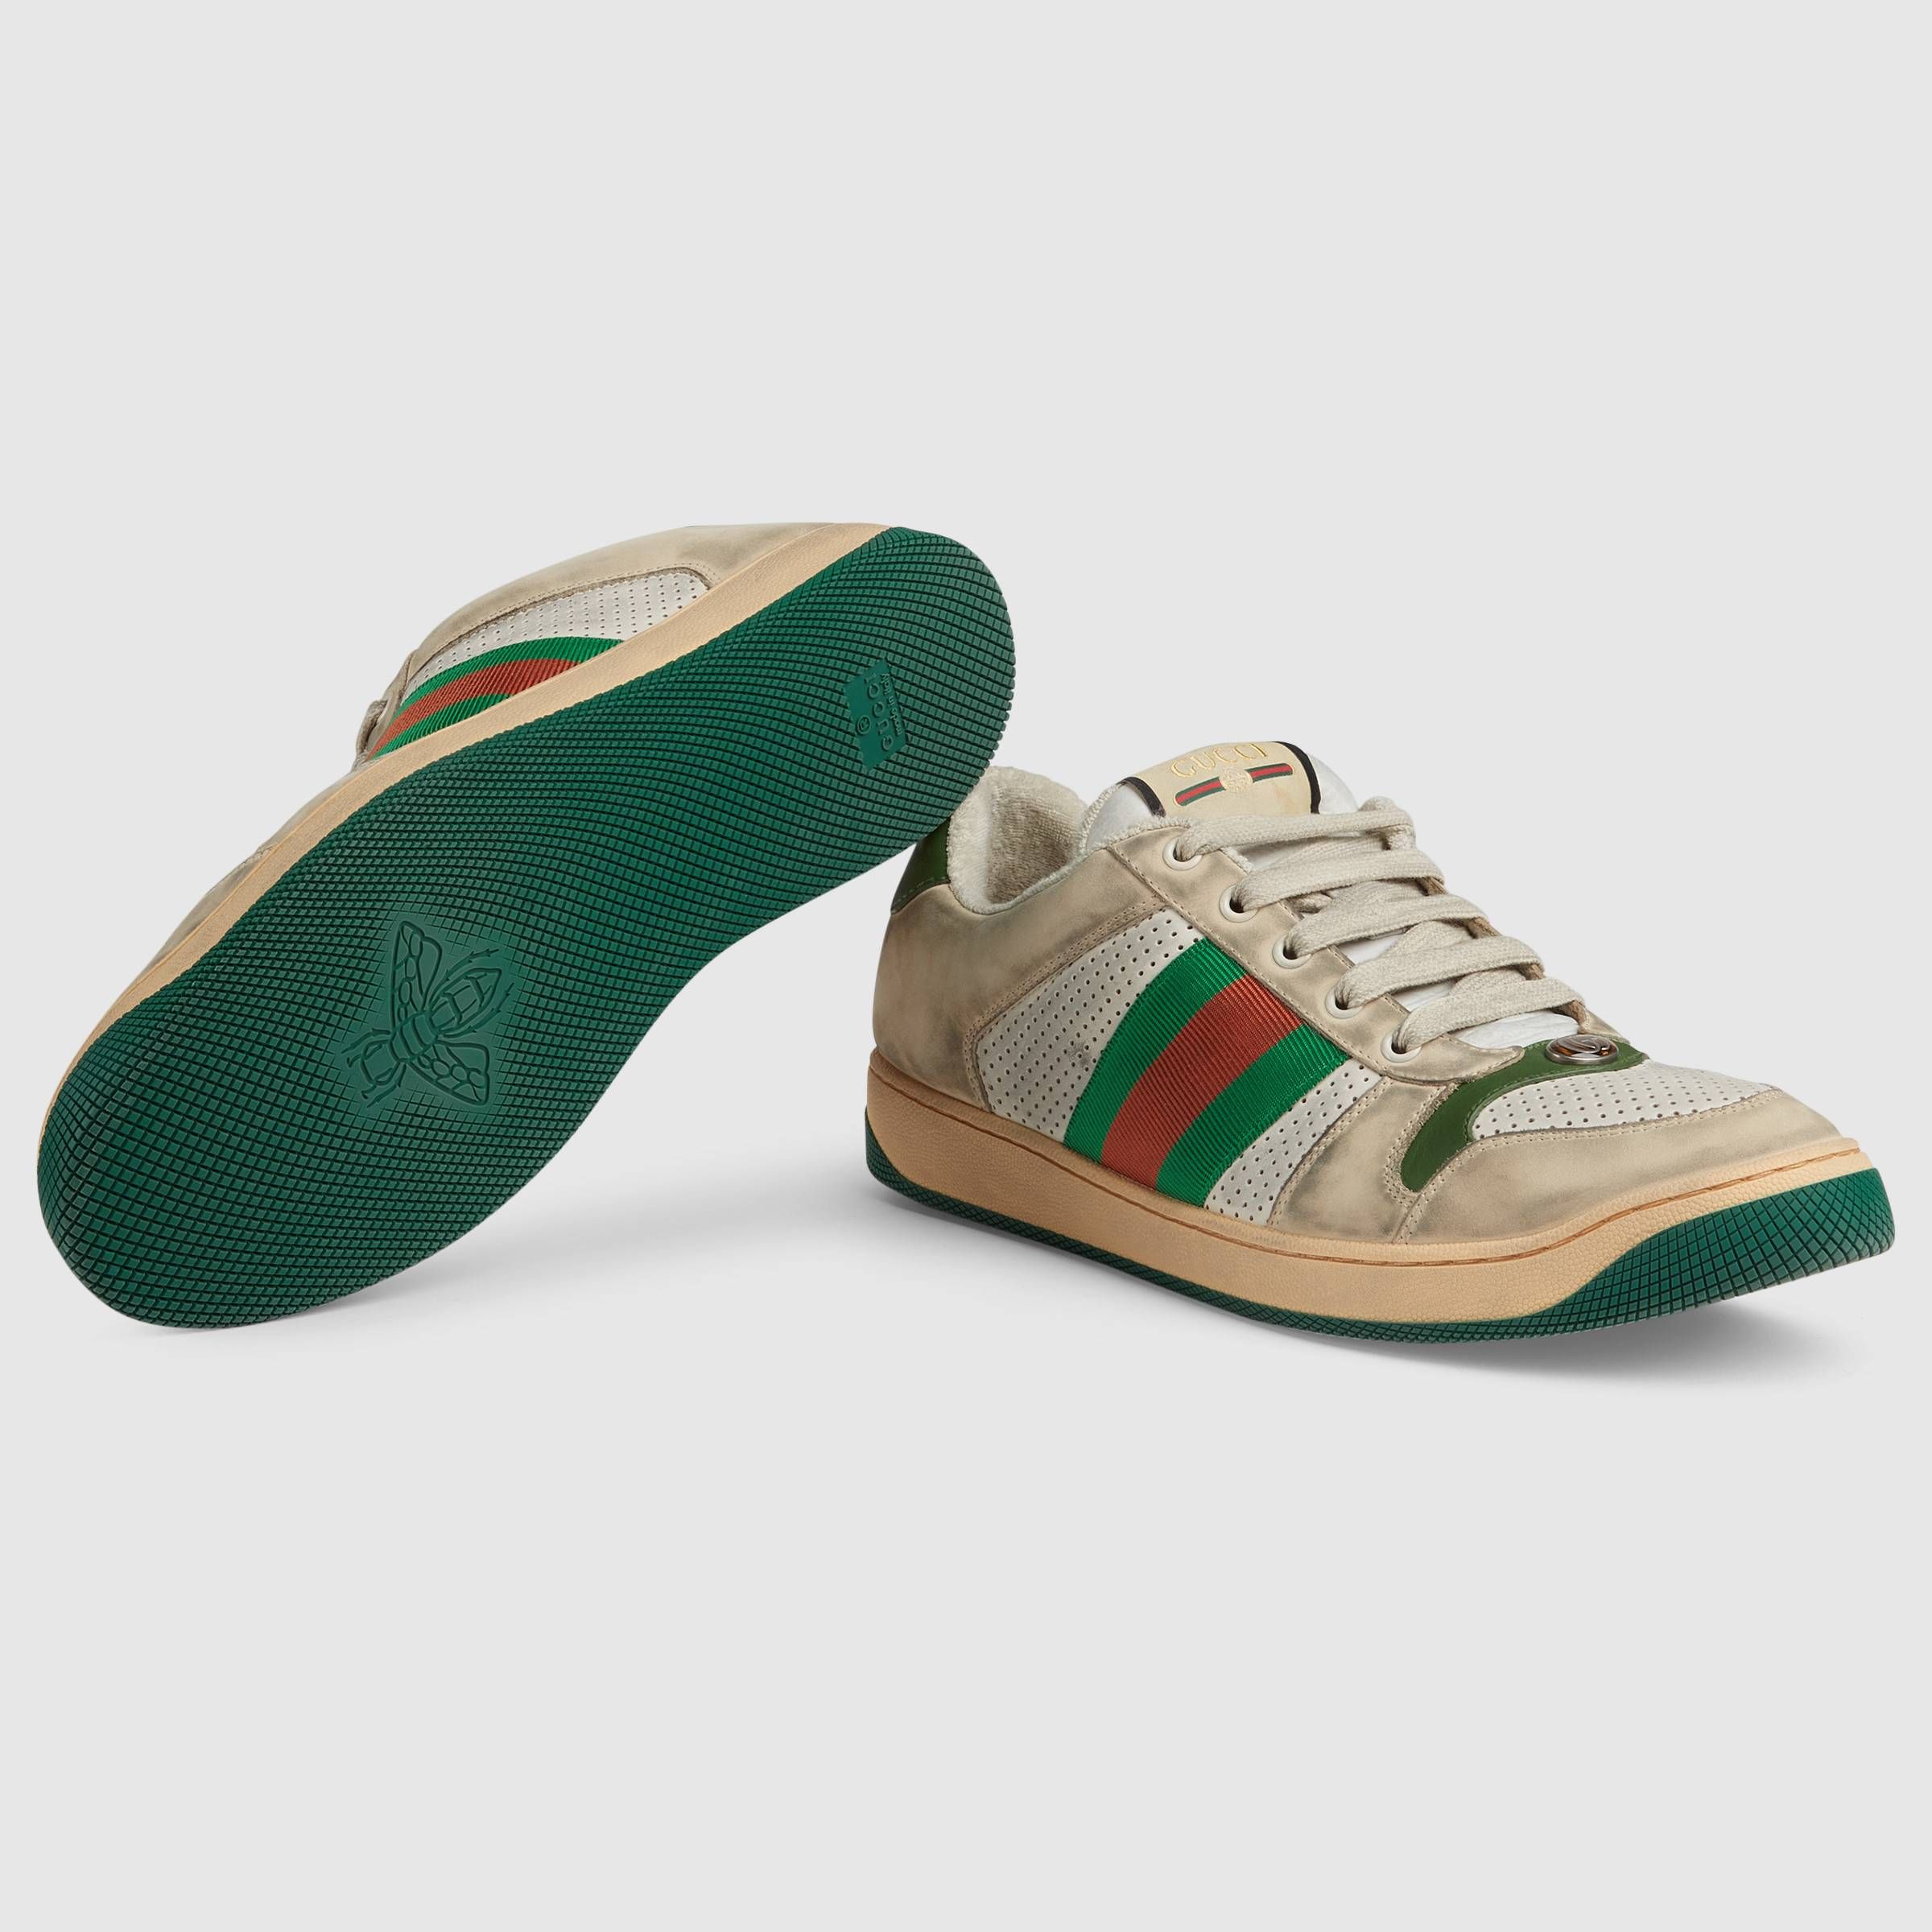 Gucci Screener | Sneaker Releases